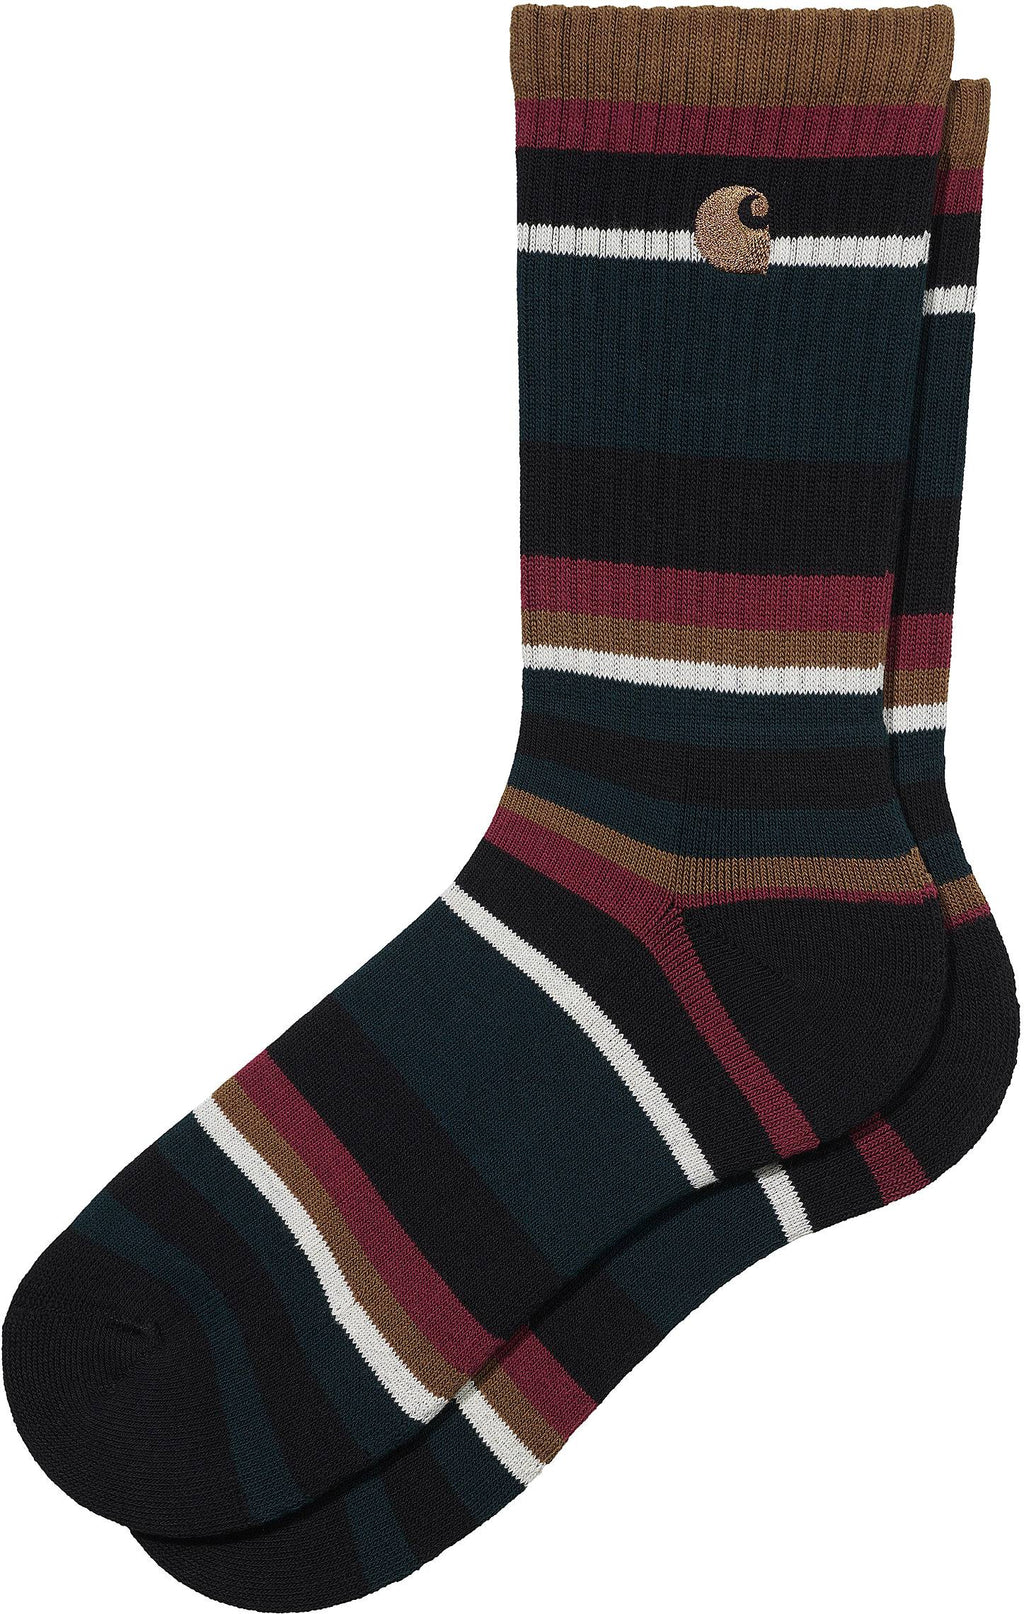  Carhartt Wip Calze Huntley Socks Deep Teal Multicolore Uomo - 1